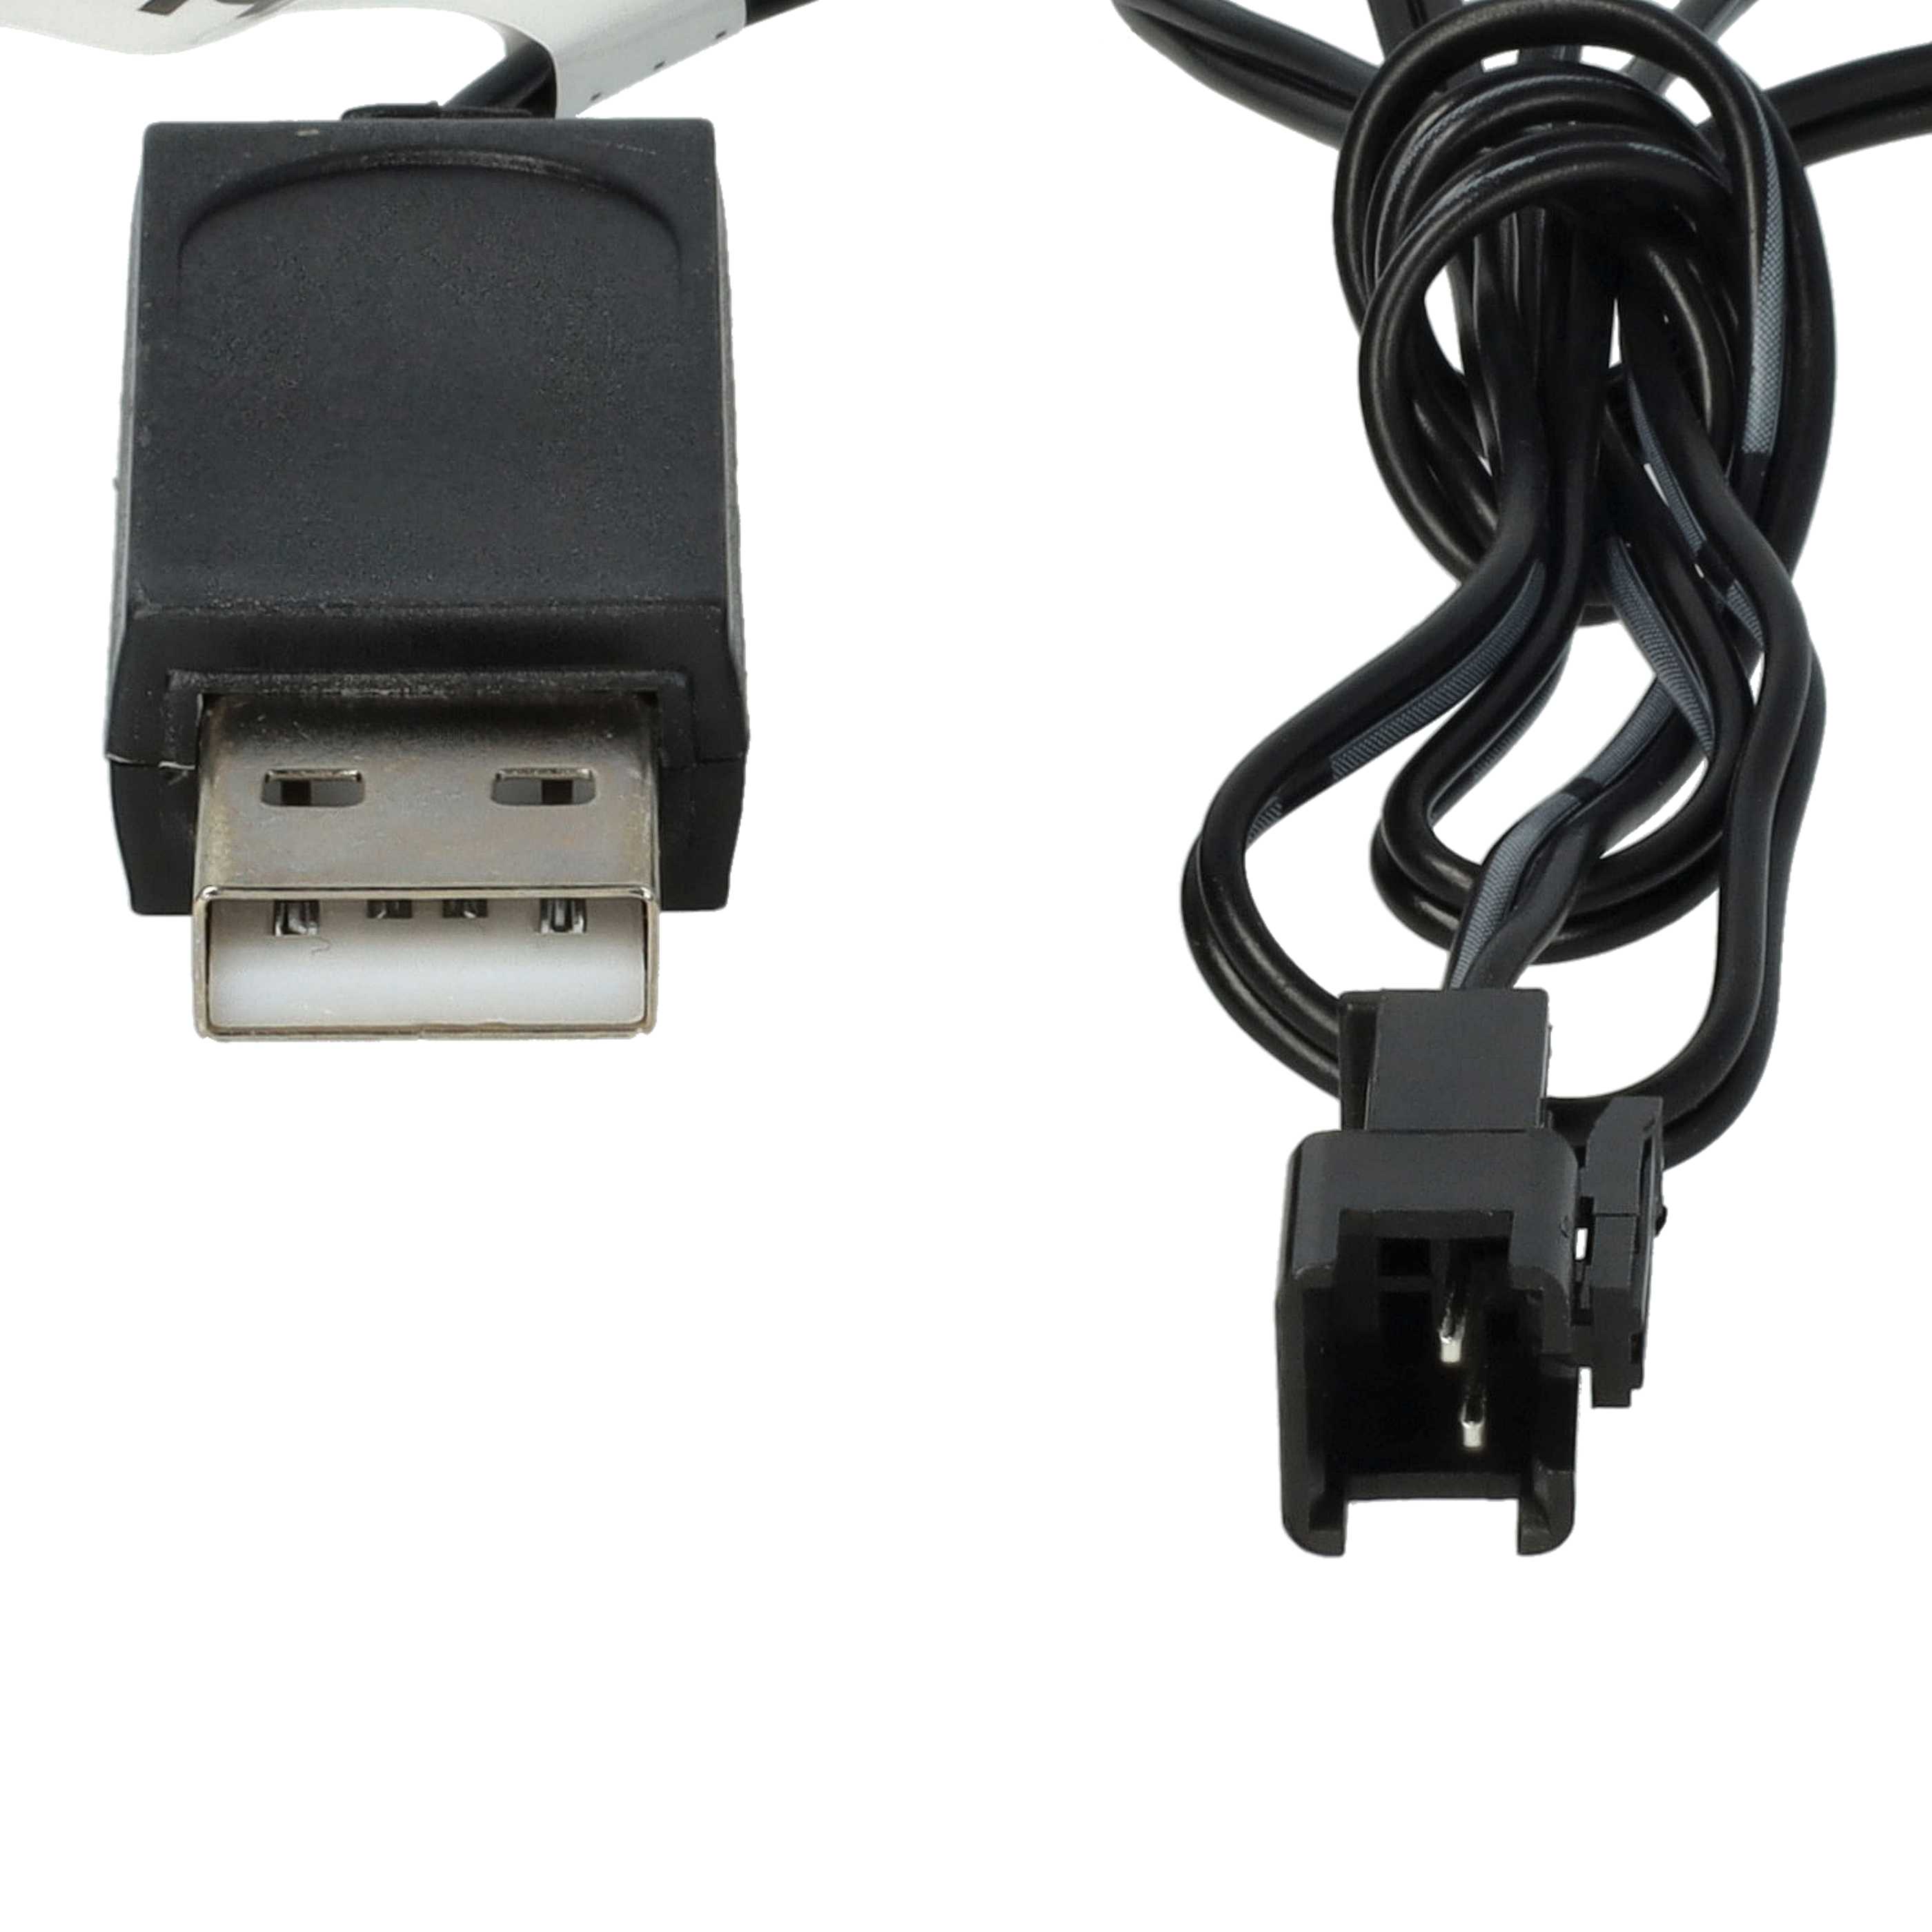 USB-Ladekabel passend für RC-Akkus mit SM-2P-Anschluss, RC-Modellbau Akkupacks - 60cm 7,2V